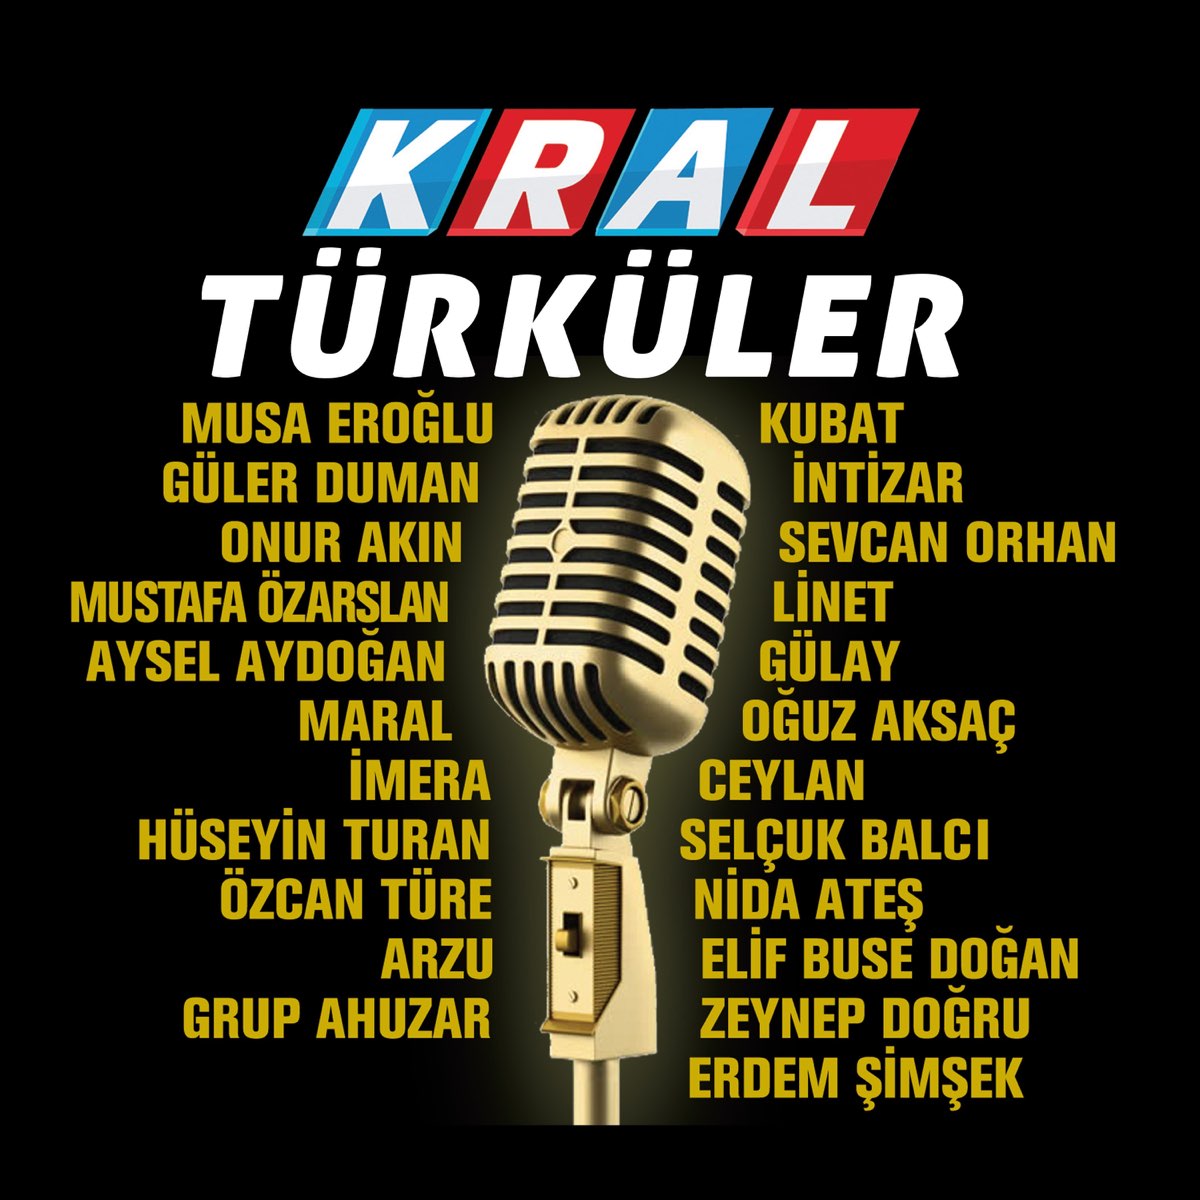 Kral Türküler - Album by Various Artists - Apple Music